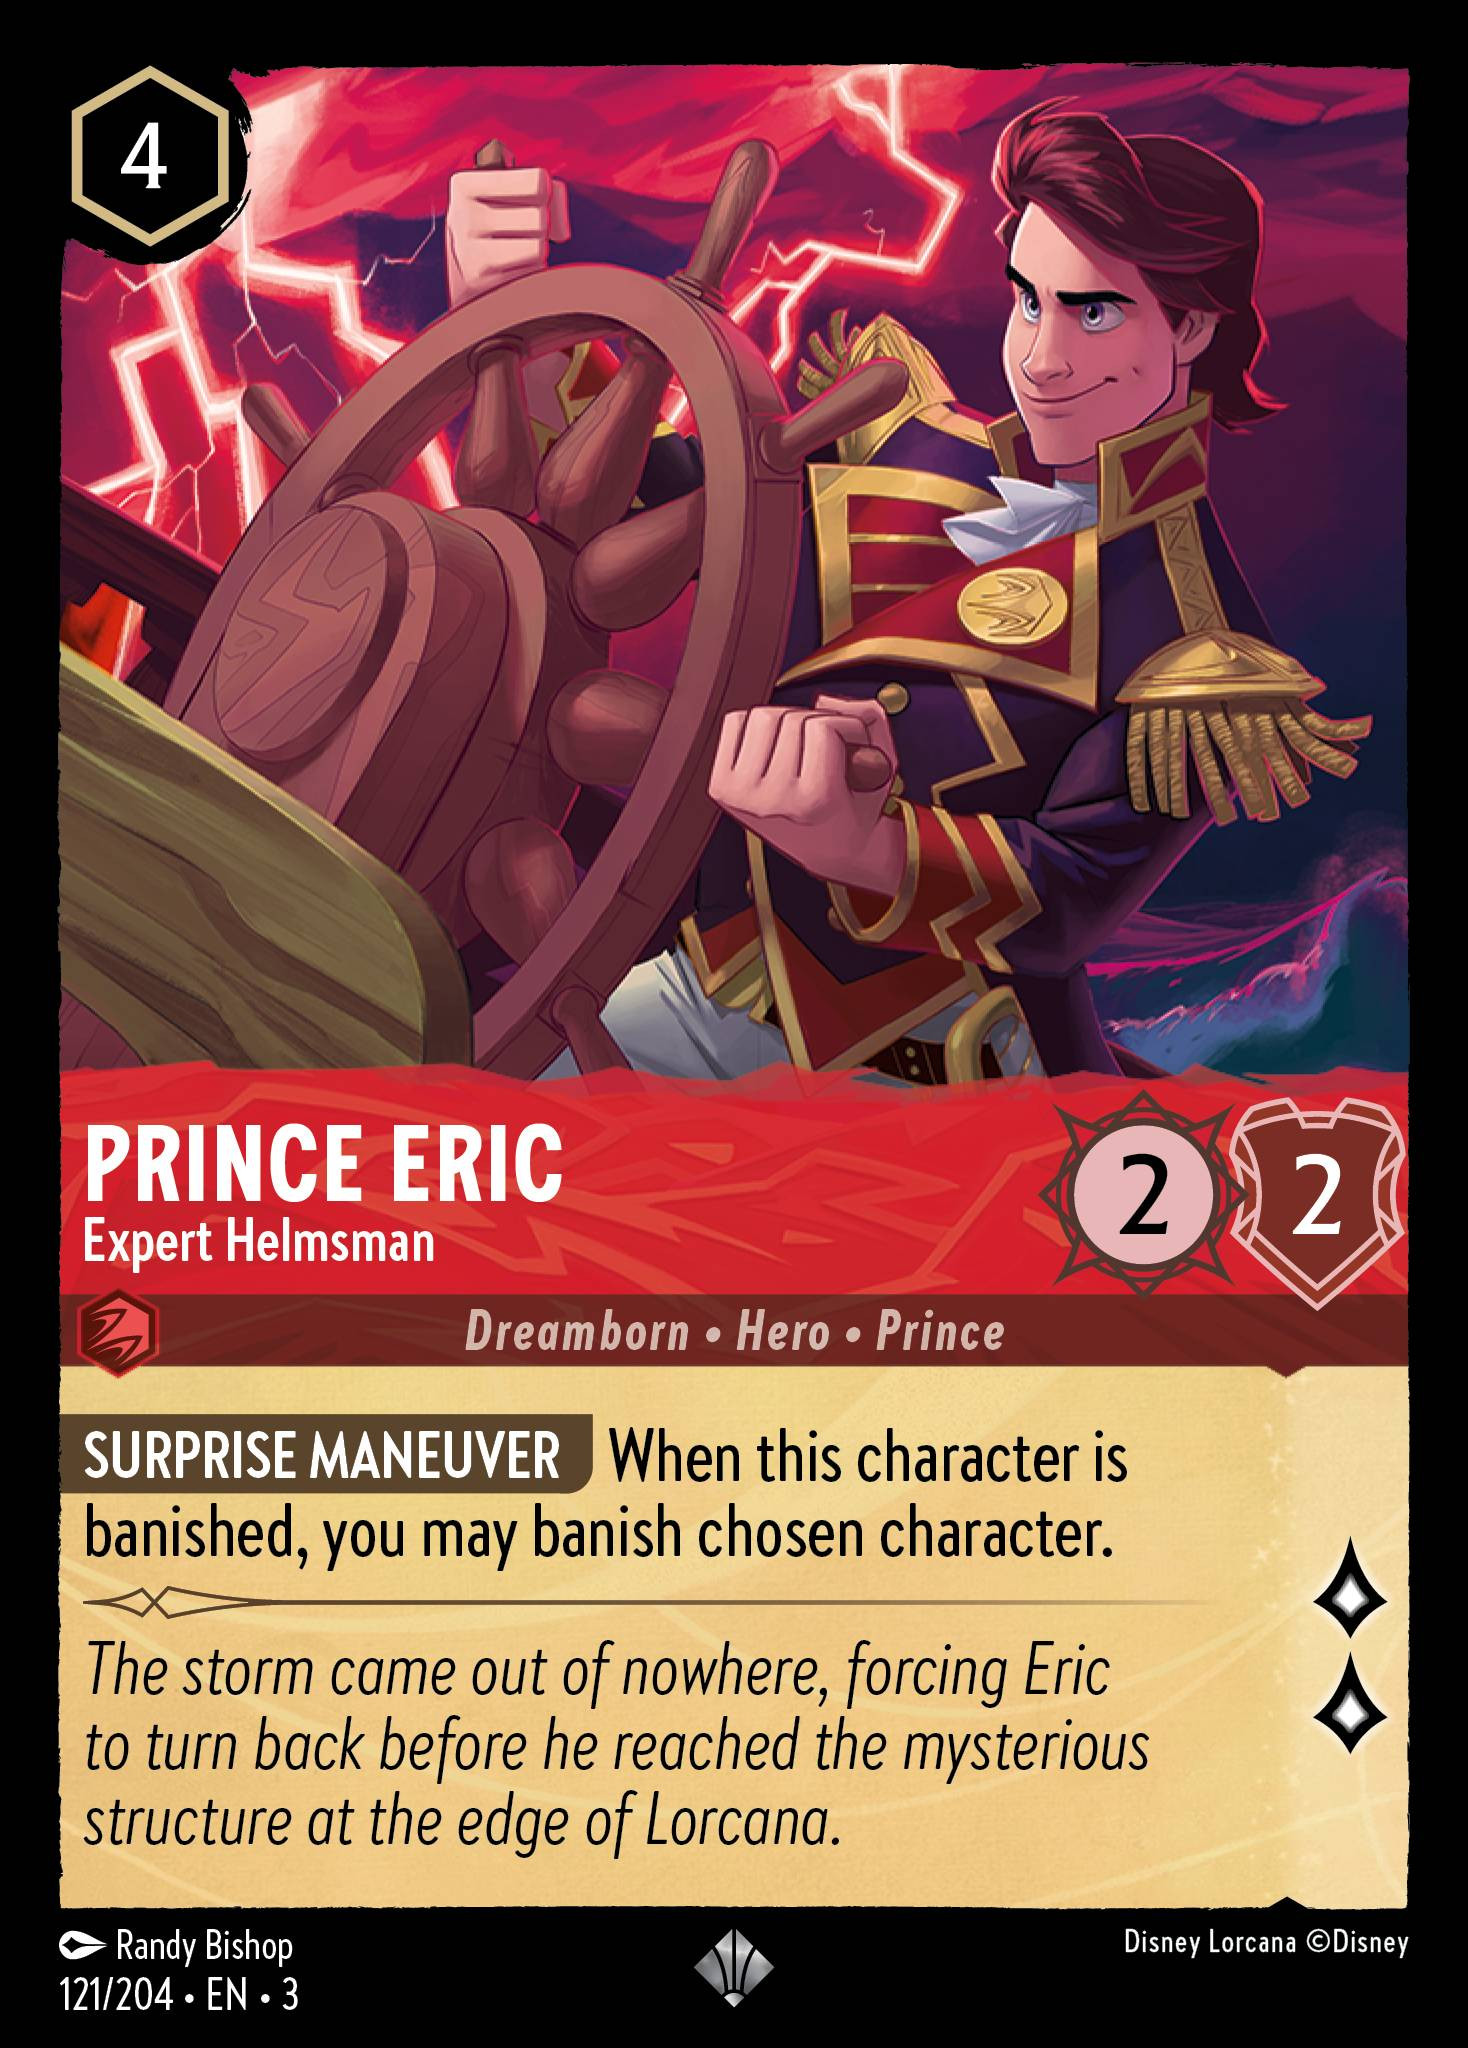 Prince Eric